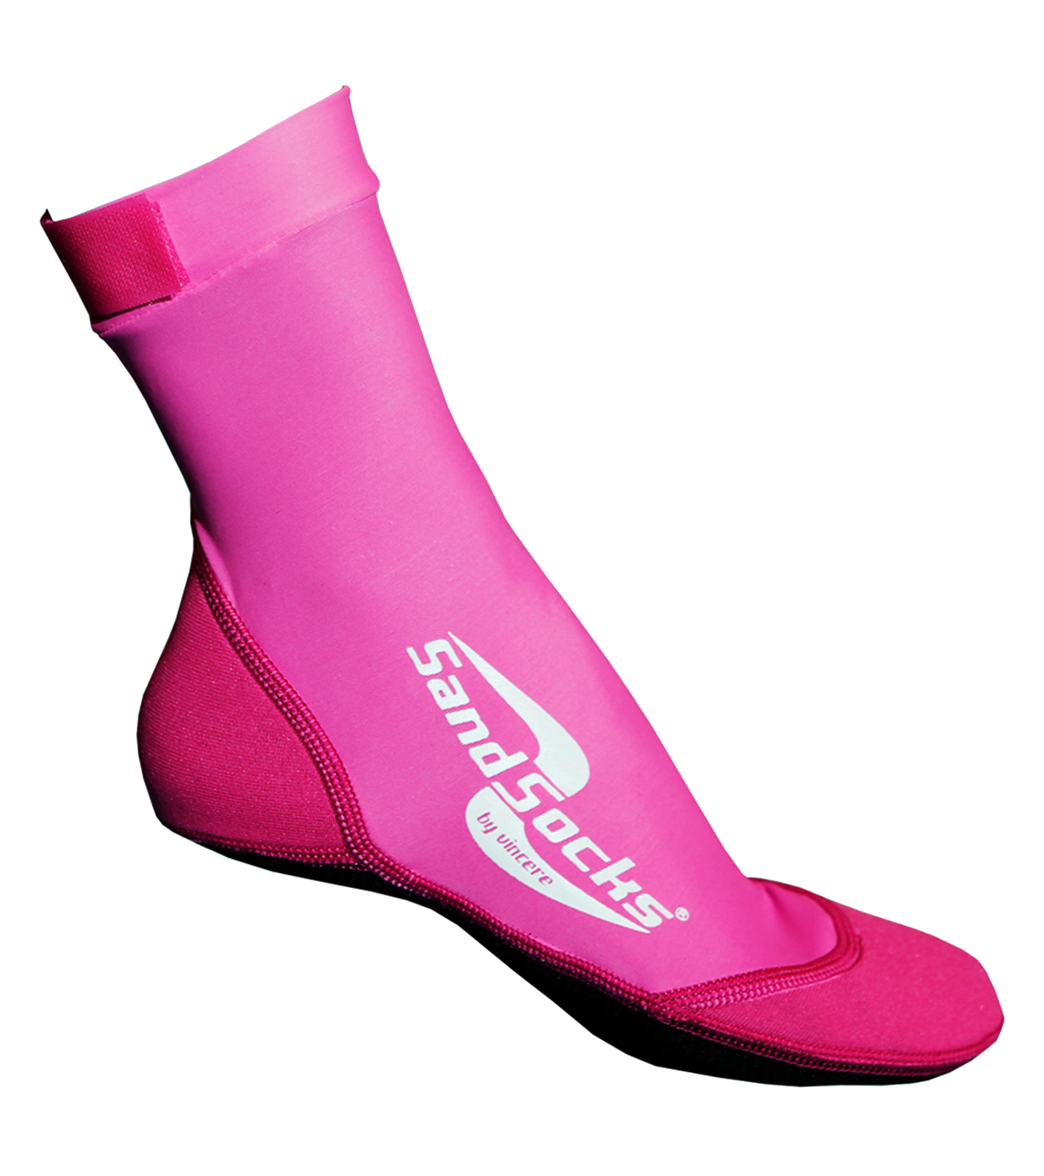 Sand Socks Sandwater Shoes - Pink Men's 7-10; Women's 9-11.5 Size 7-10 - Swimoutlet.com